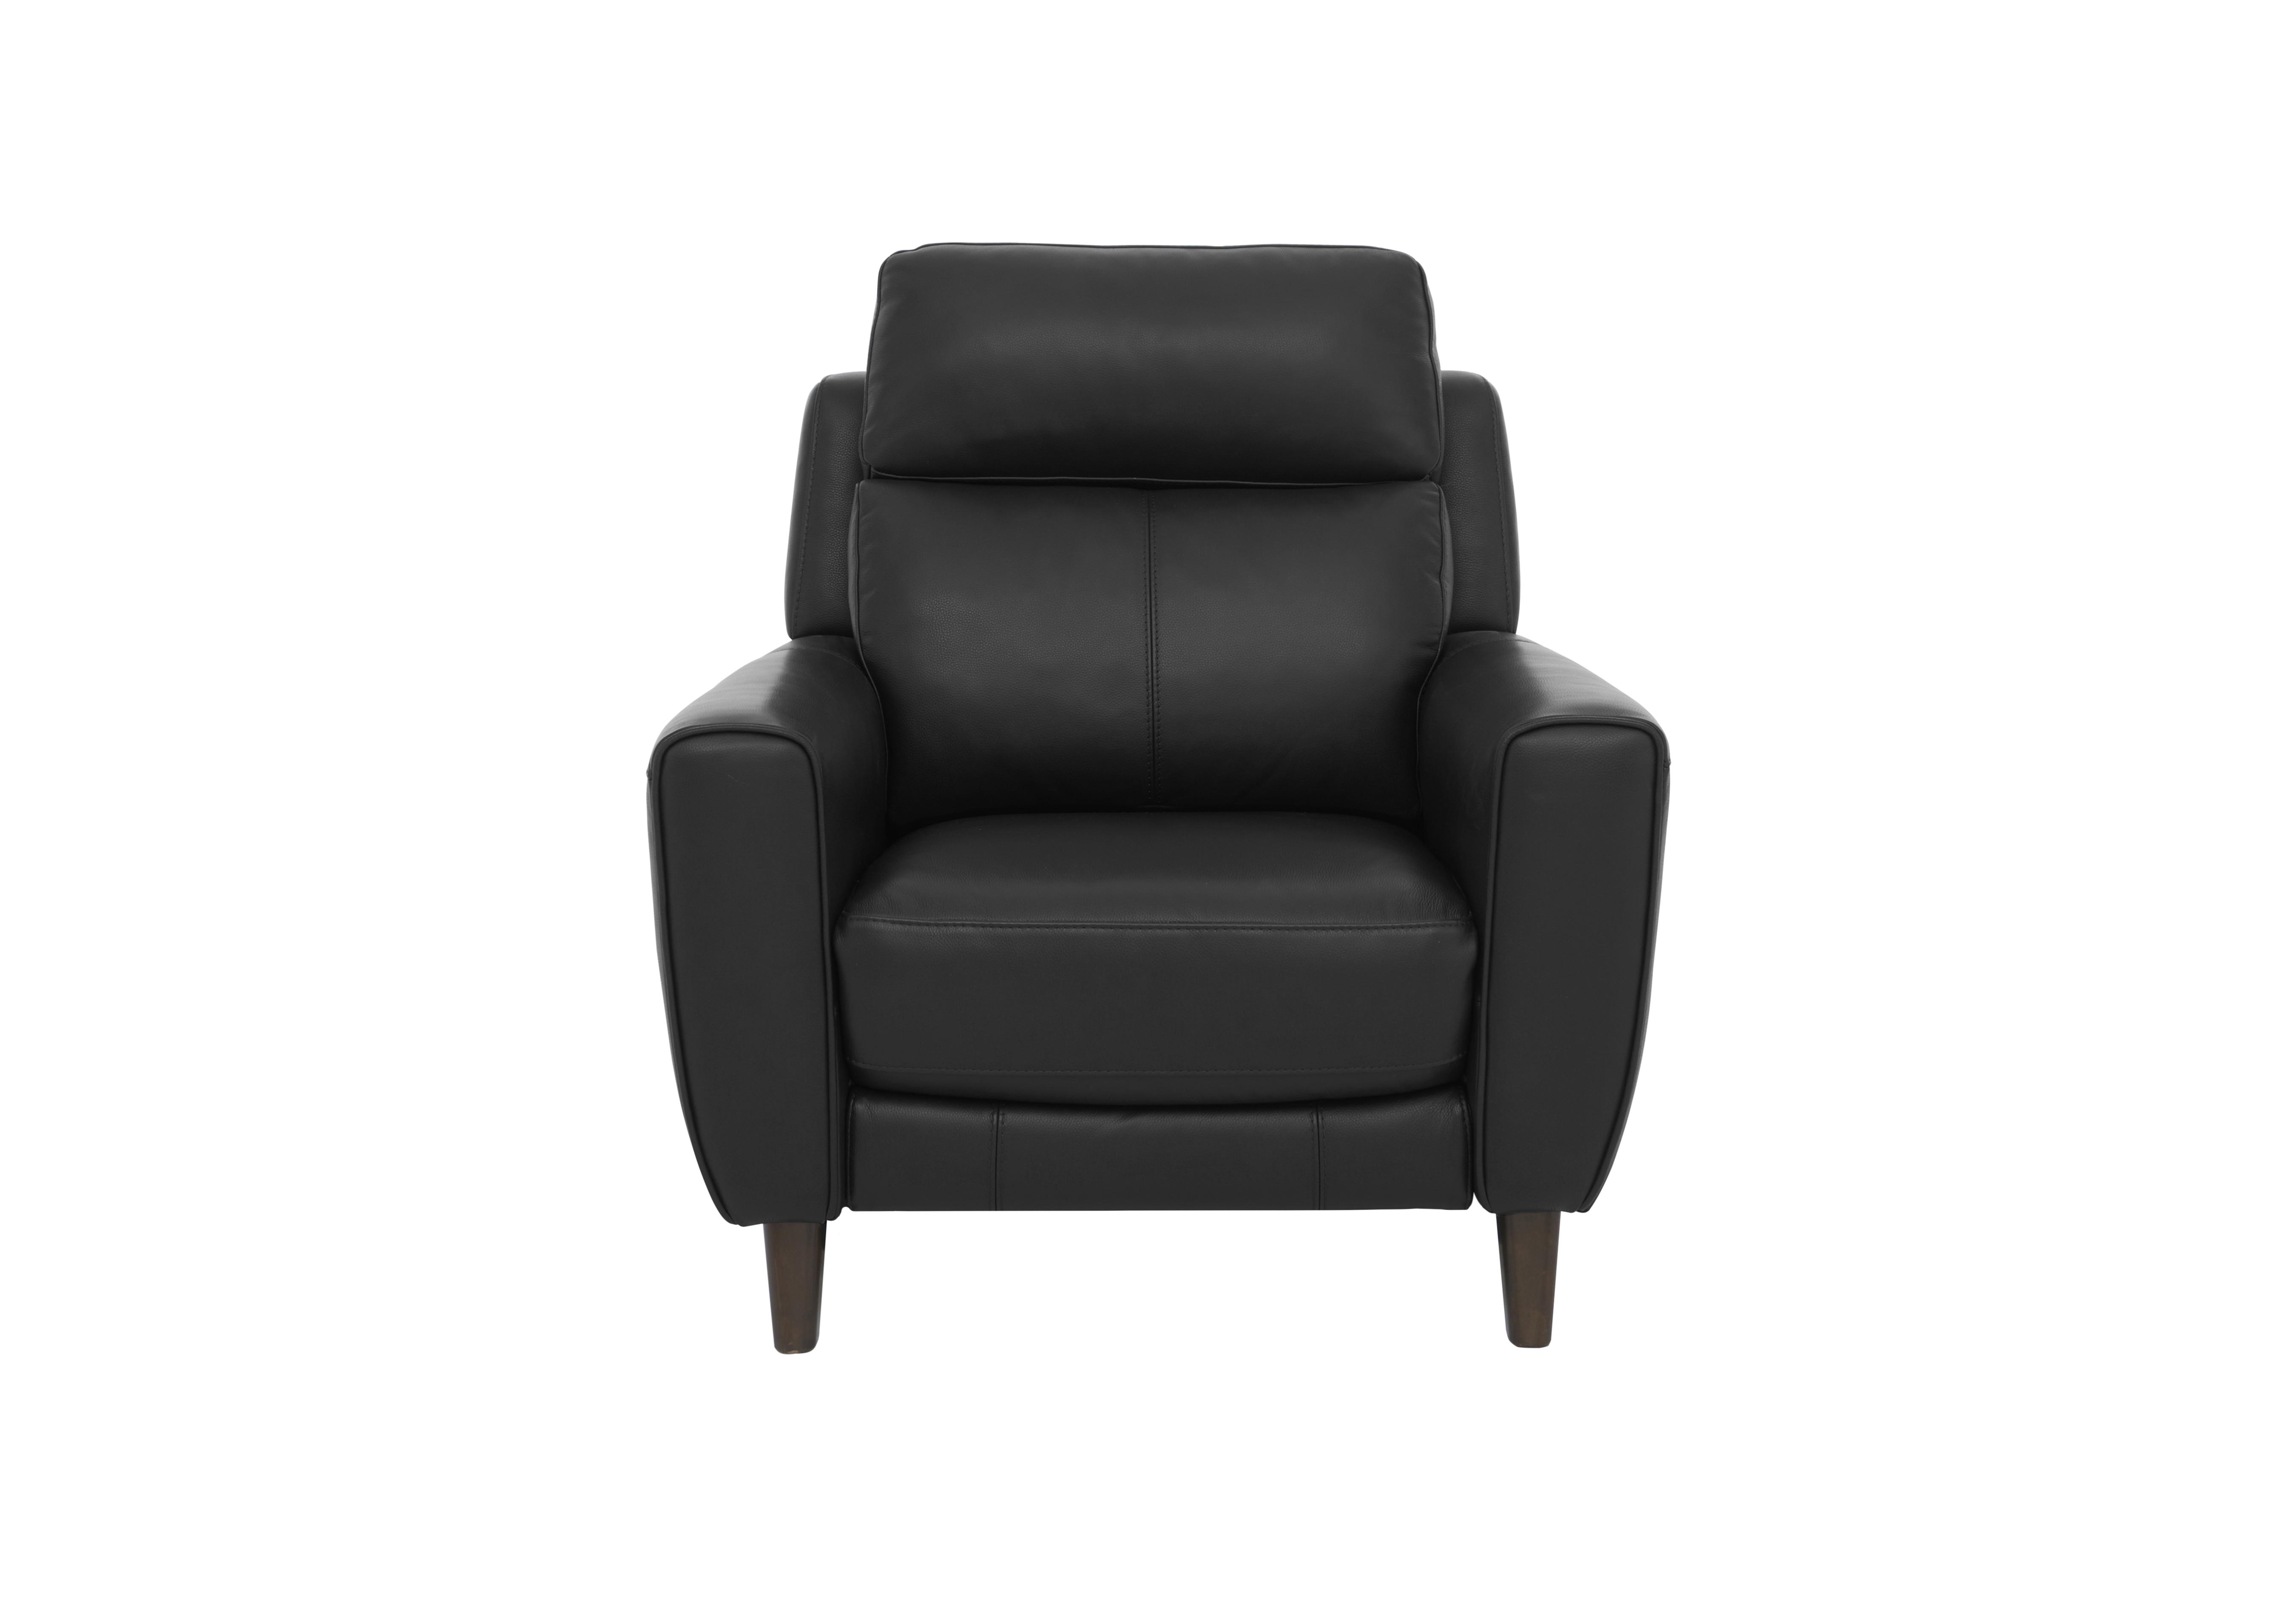 Zen Leather Power Recliner Chair with Power Headrest in Bx-023c Black on Furniture Village